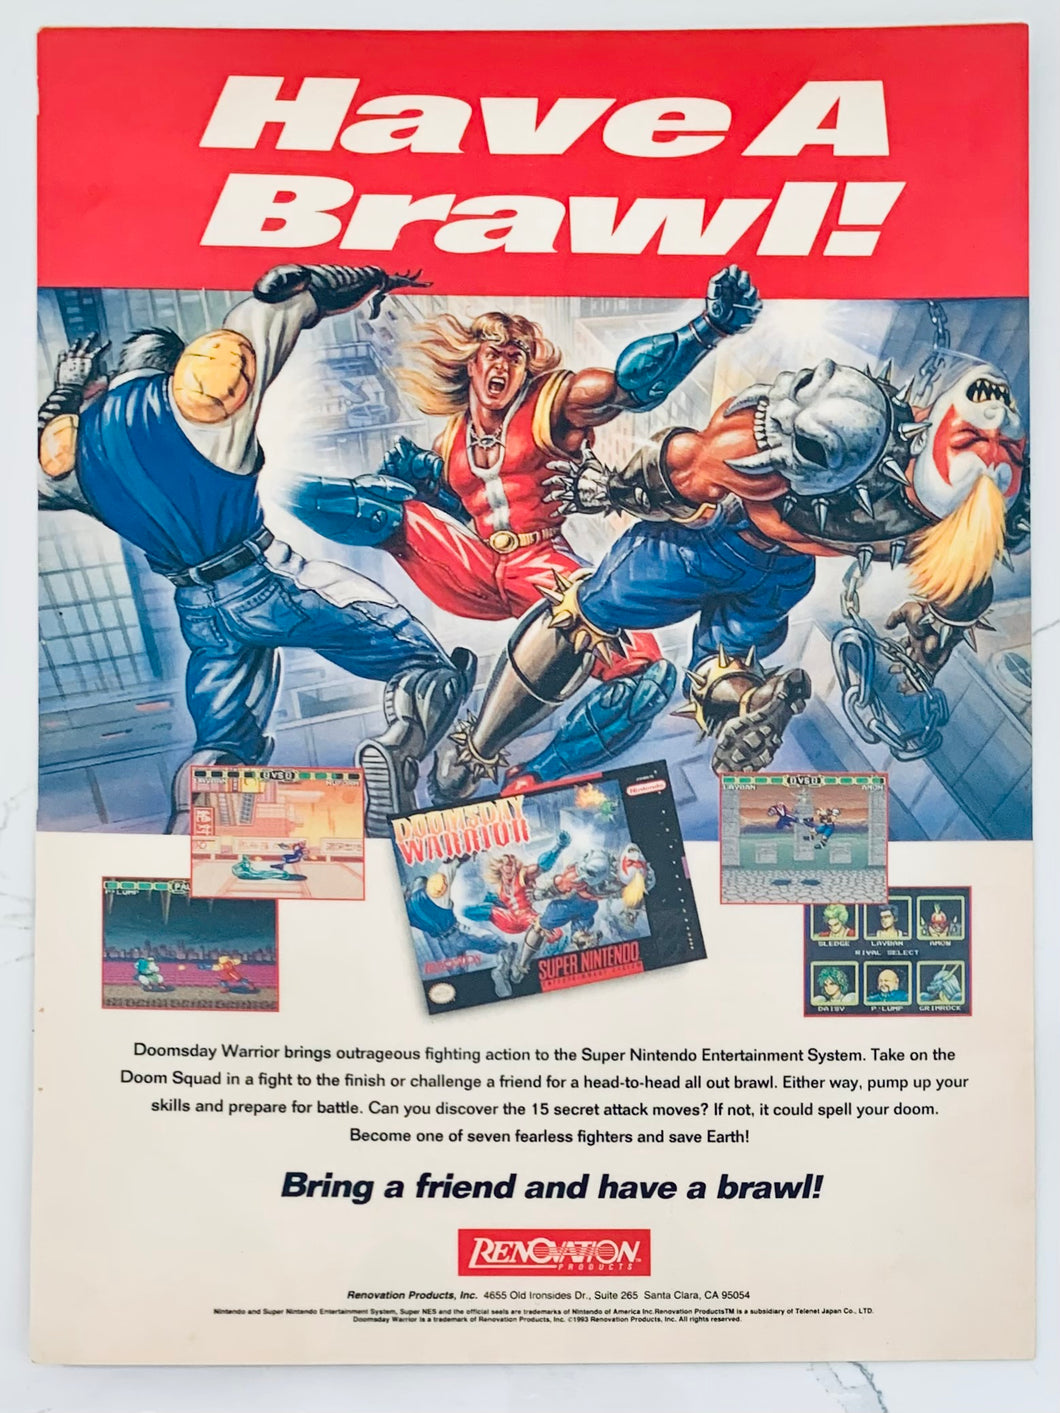 Doomsday Warrior - SNES - Original Vintage Advertisement - Print Ads - Laminated A4 Poster